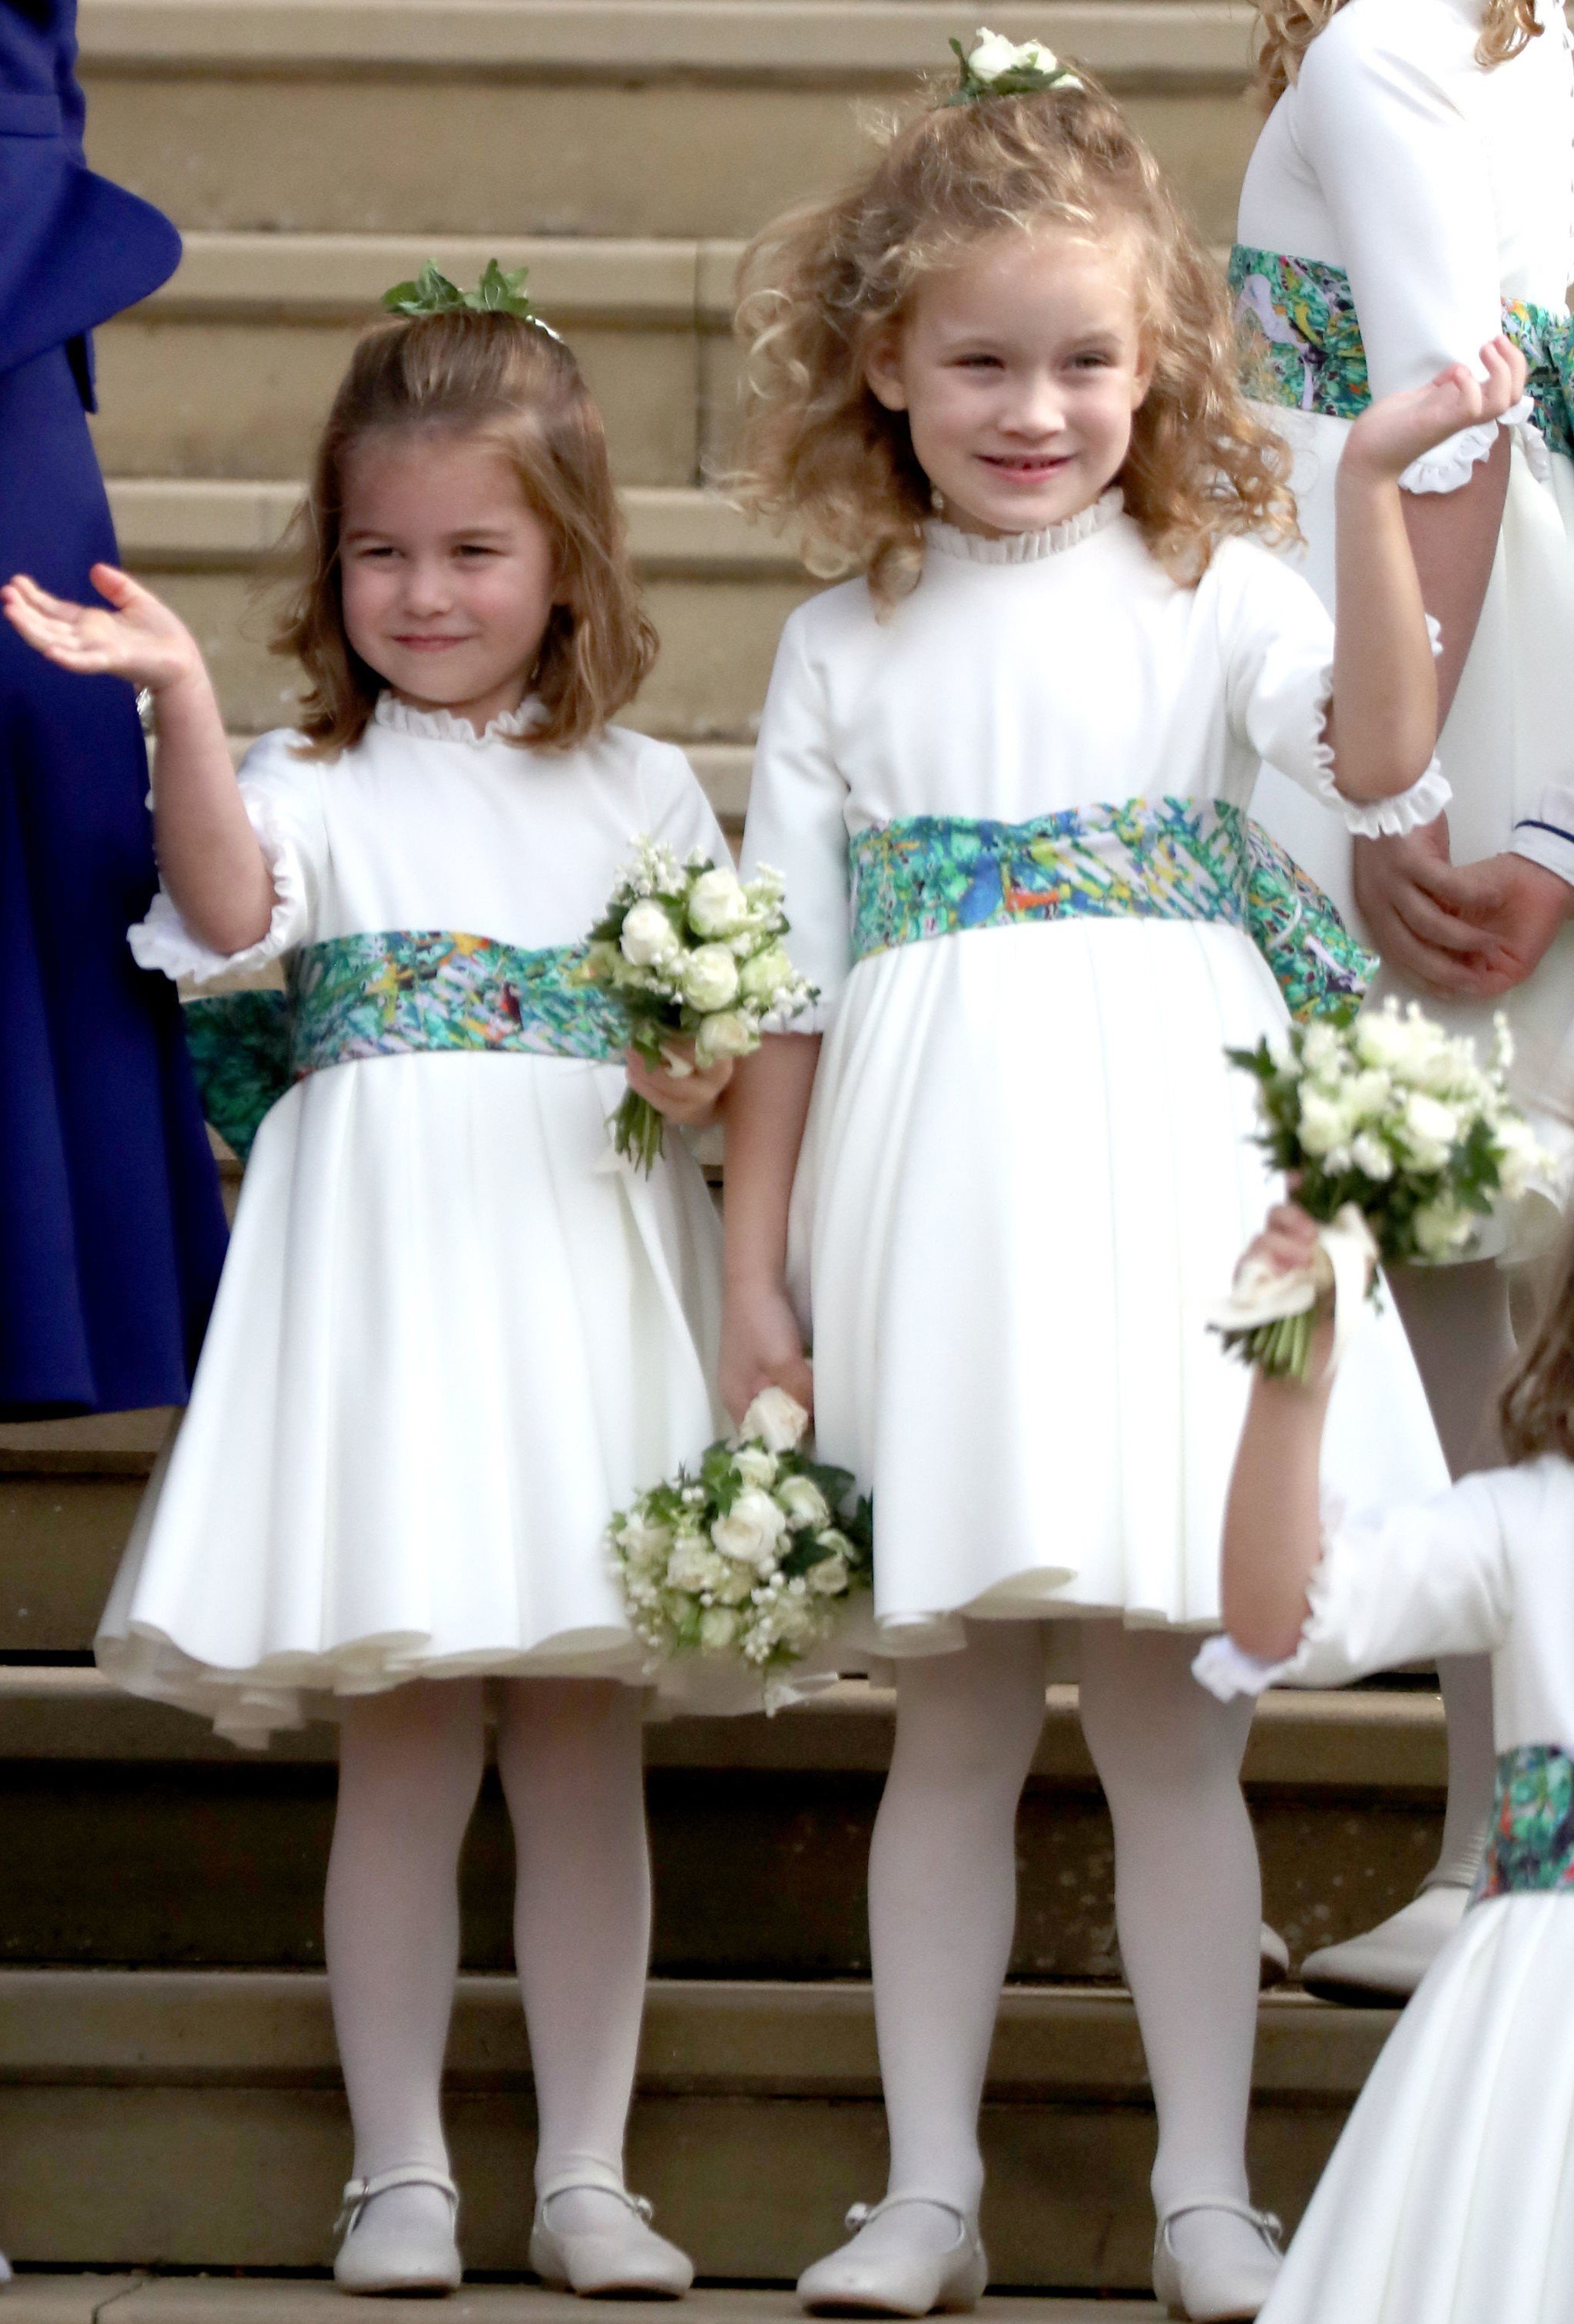 Bridesmaids Princess Charlotte and Maud Windsor waving after the royal wedding of Princess Eugenie and Jack Brooksbank